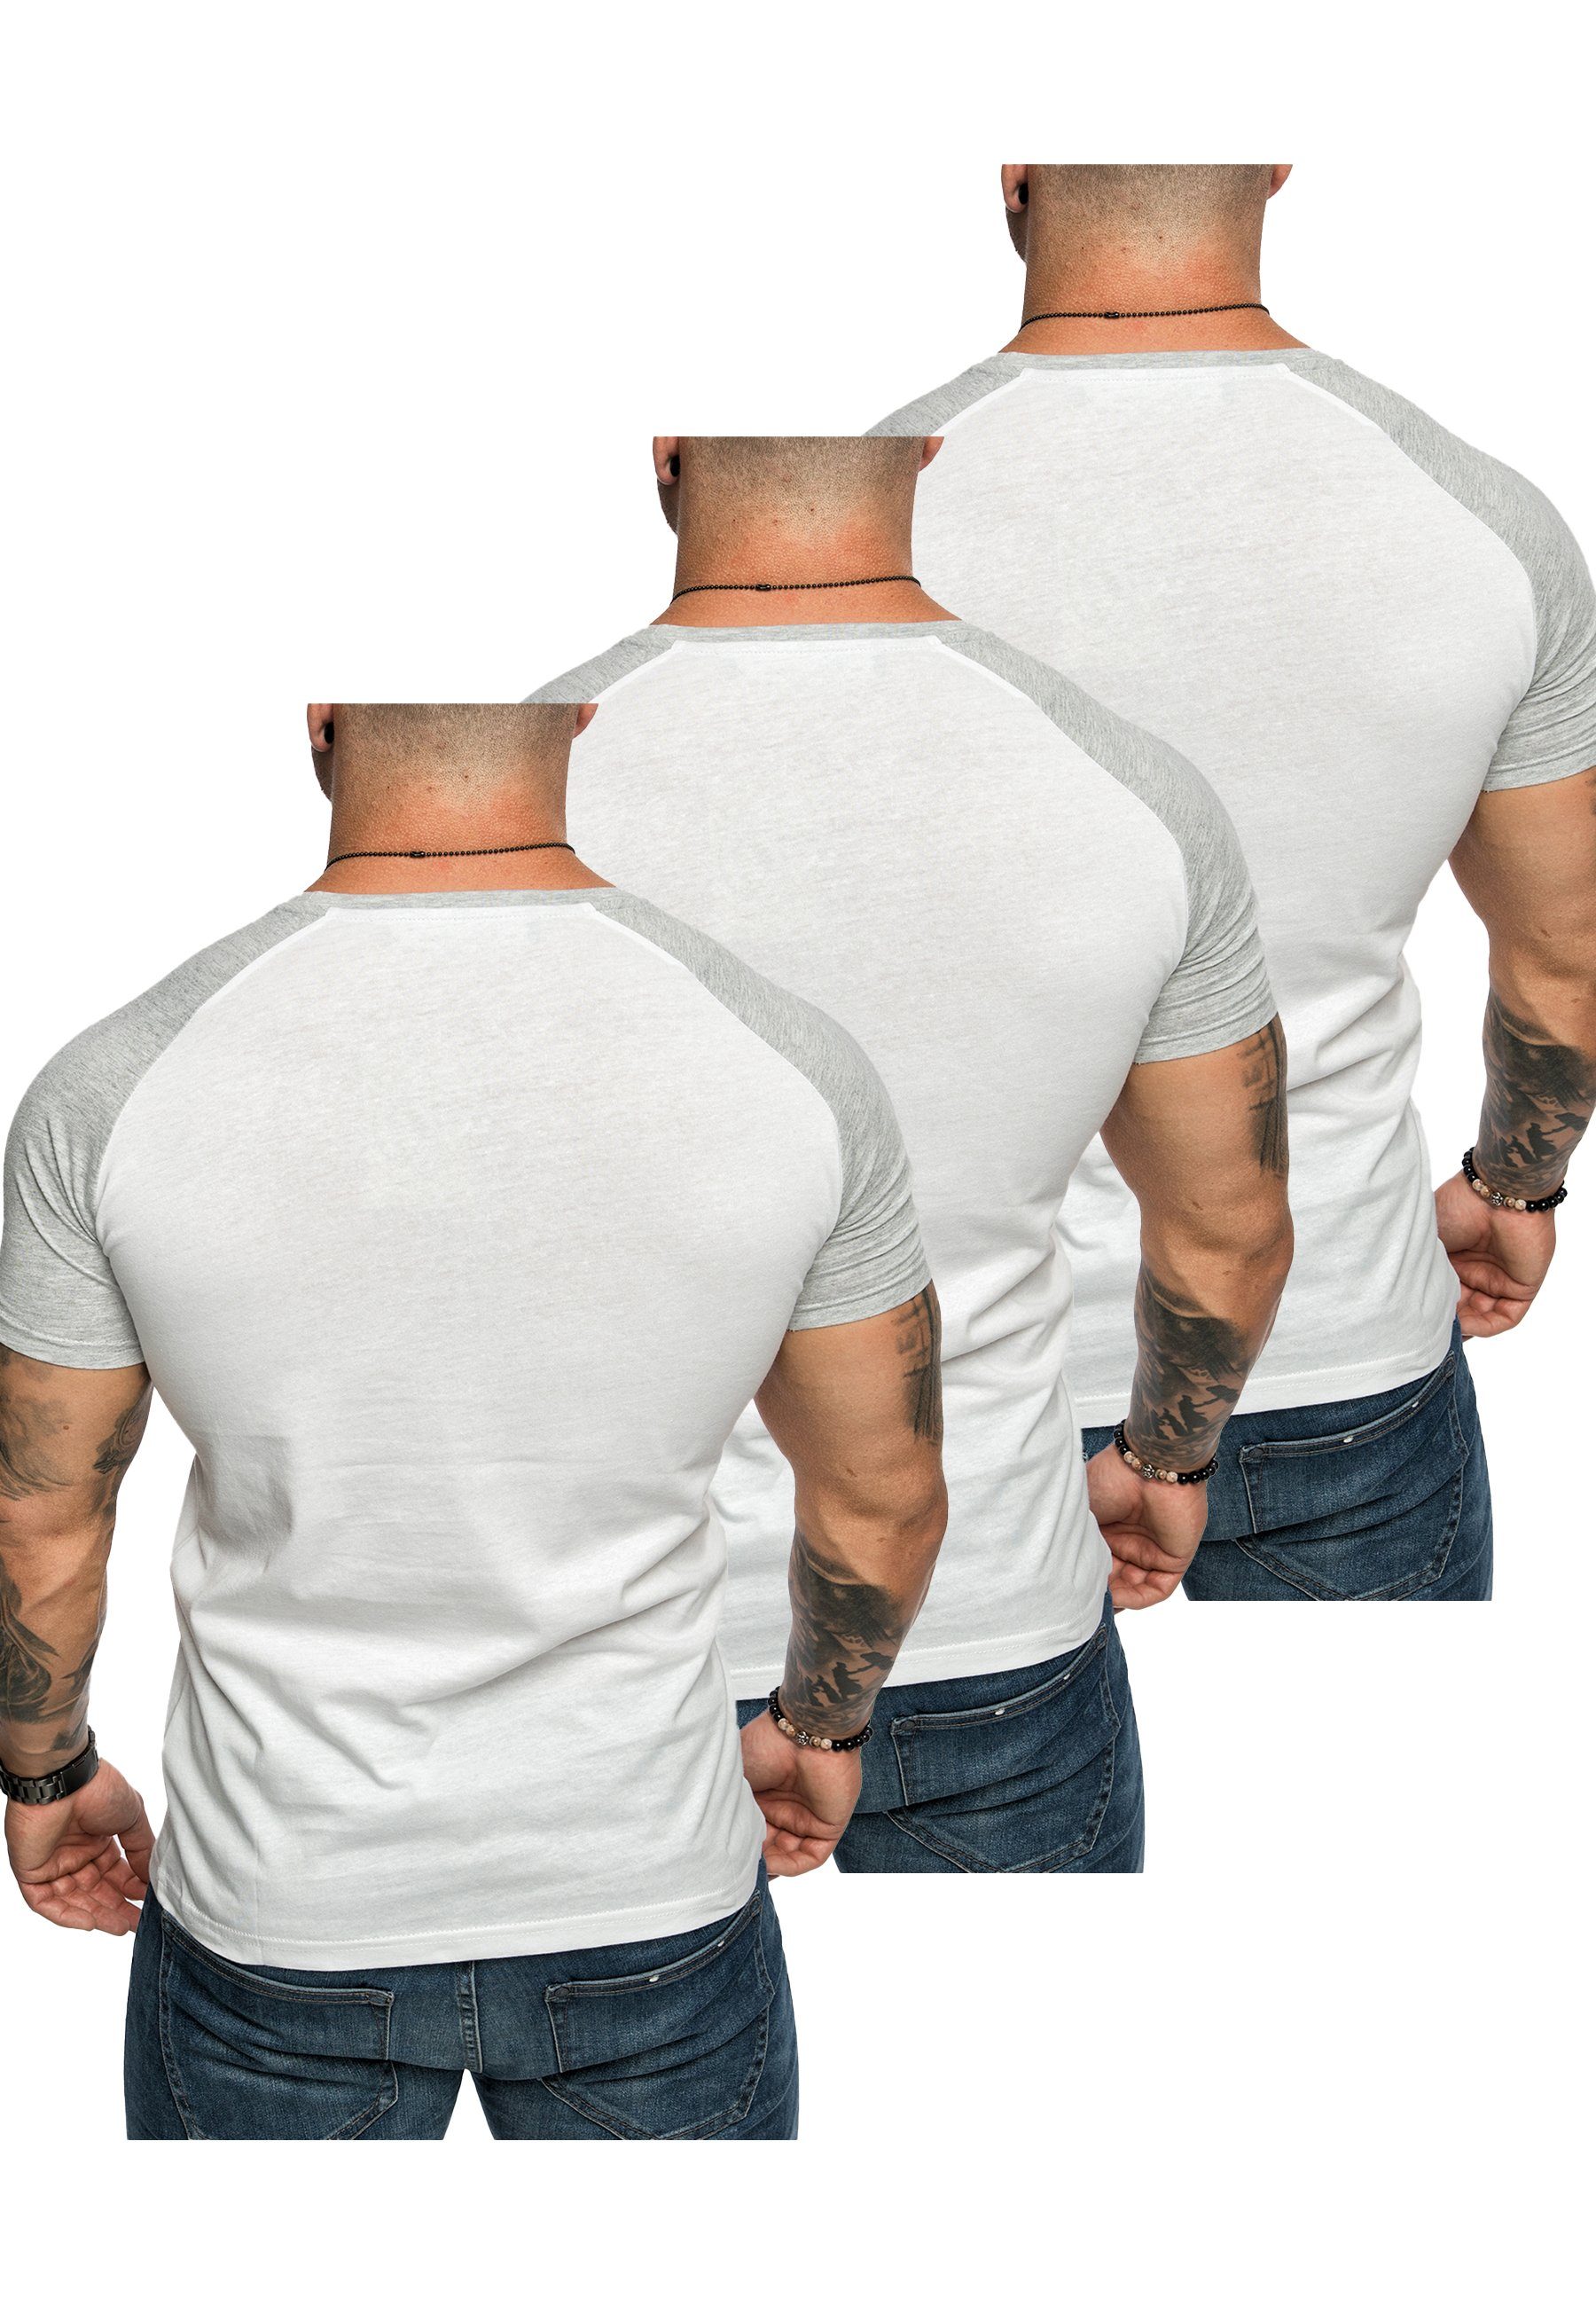 Herren Basic T-Shirts Amaci&Sons 3er-Pack T-Shirt Weiß/Grau) Oversize T-Shirt (3er-Pack) SALEM 3. (3x Kontrast Raglan